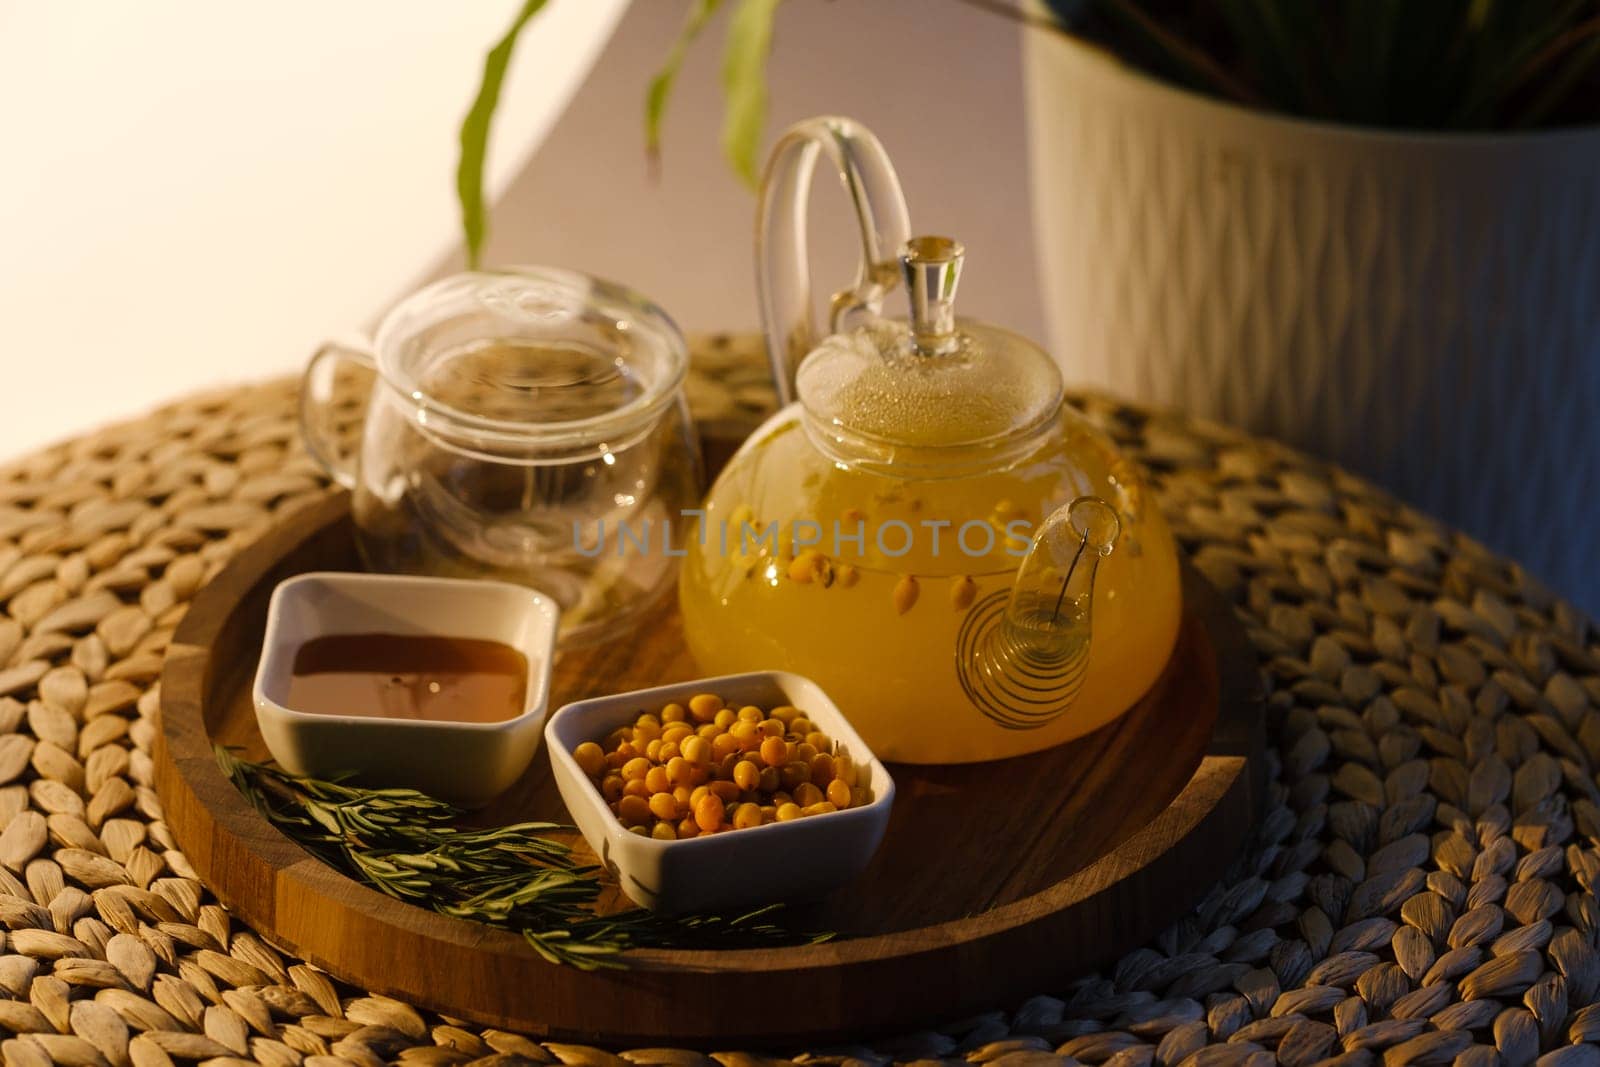 A teapot with sea buckthorn tea, honey and a plate with sea buckthorn on a tray.